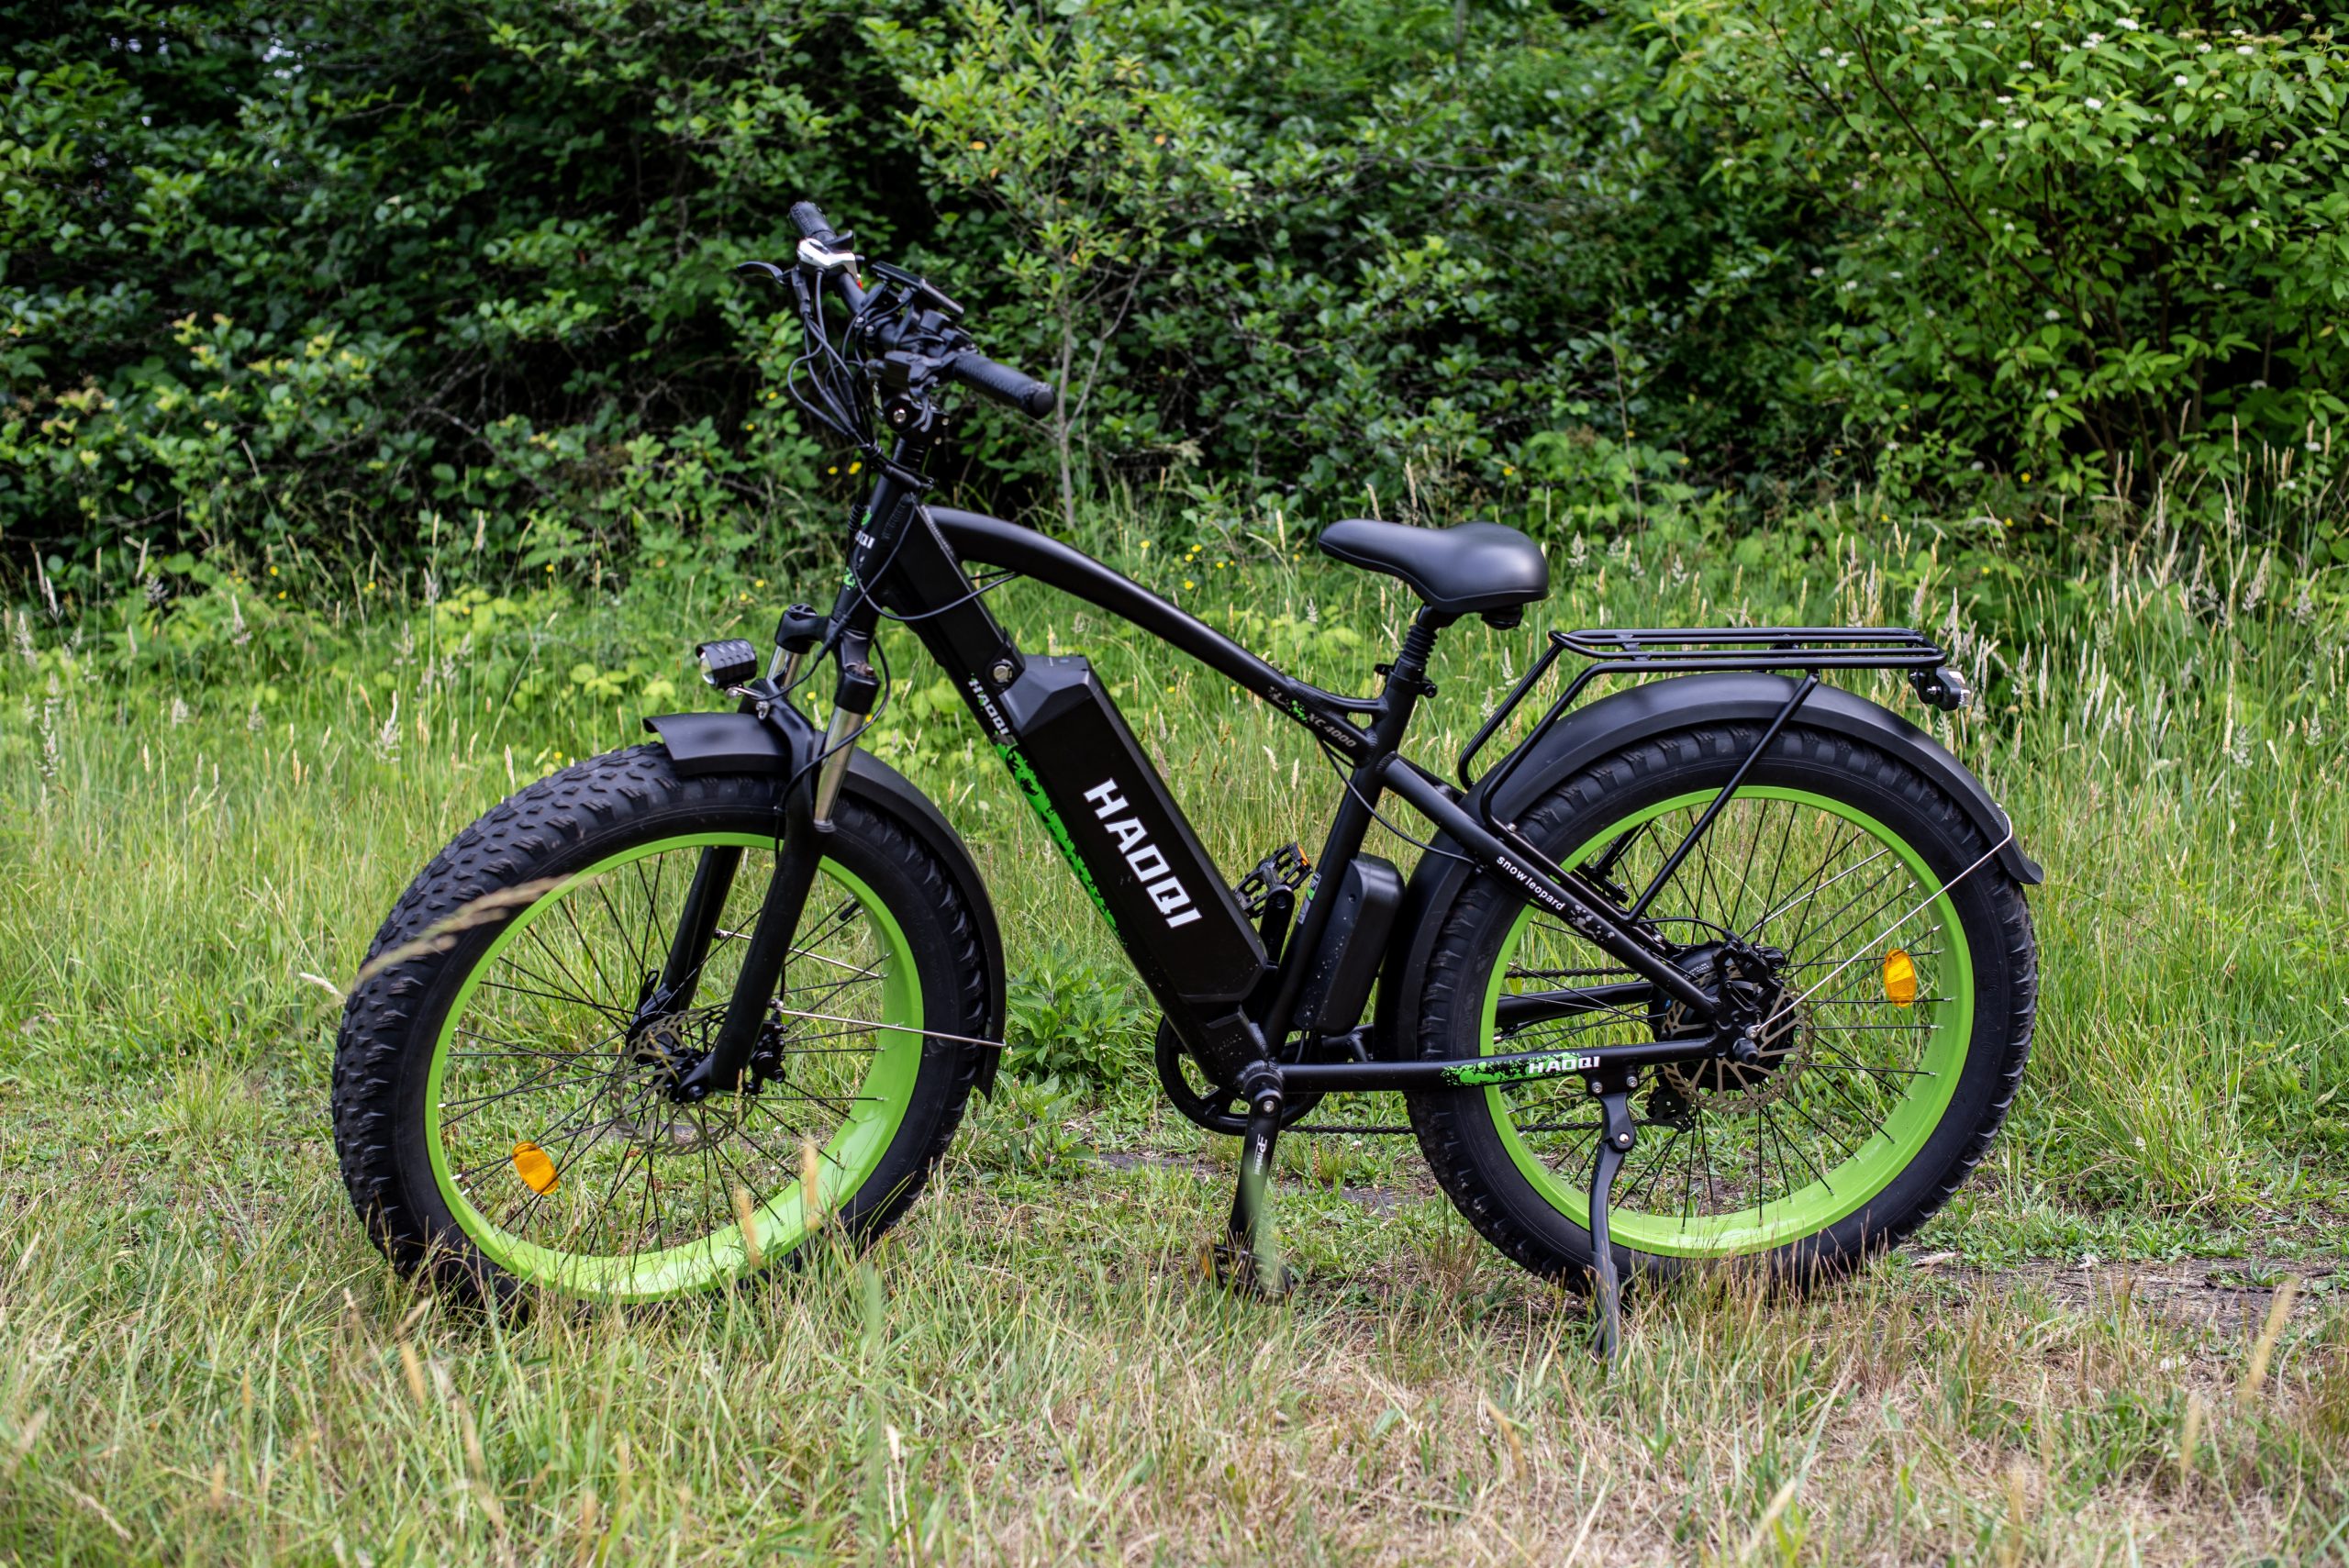 HAOQI Green Leopard Pro Electric Bike